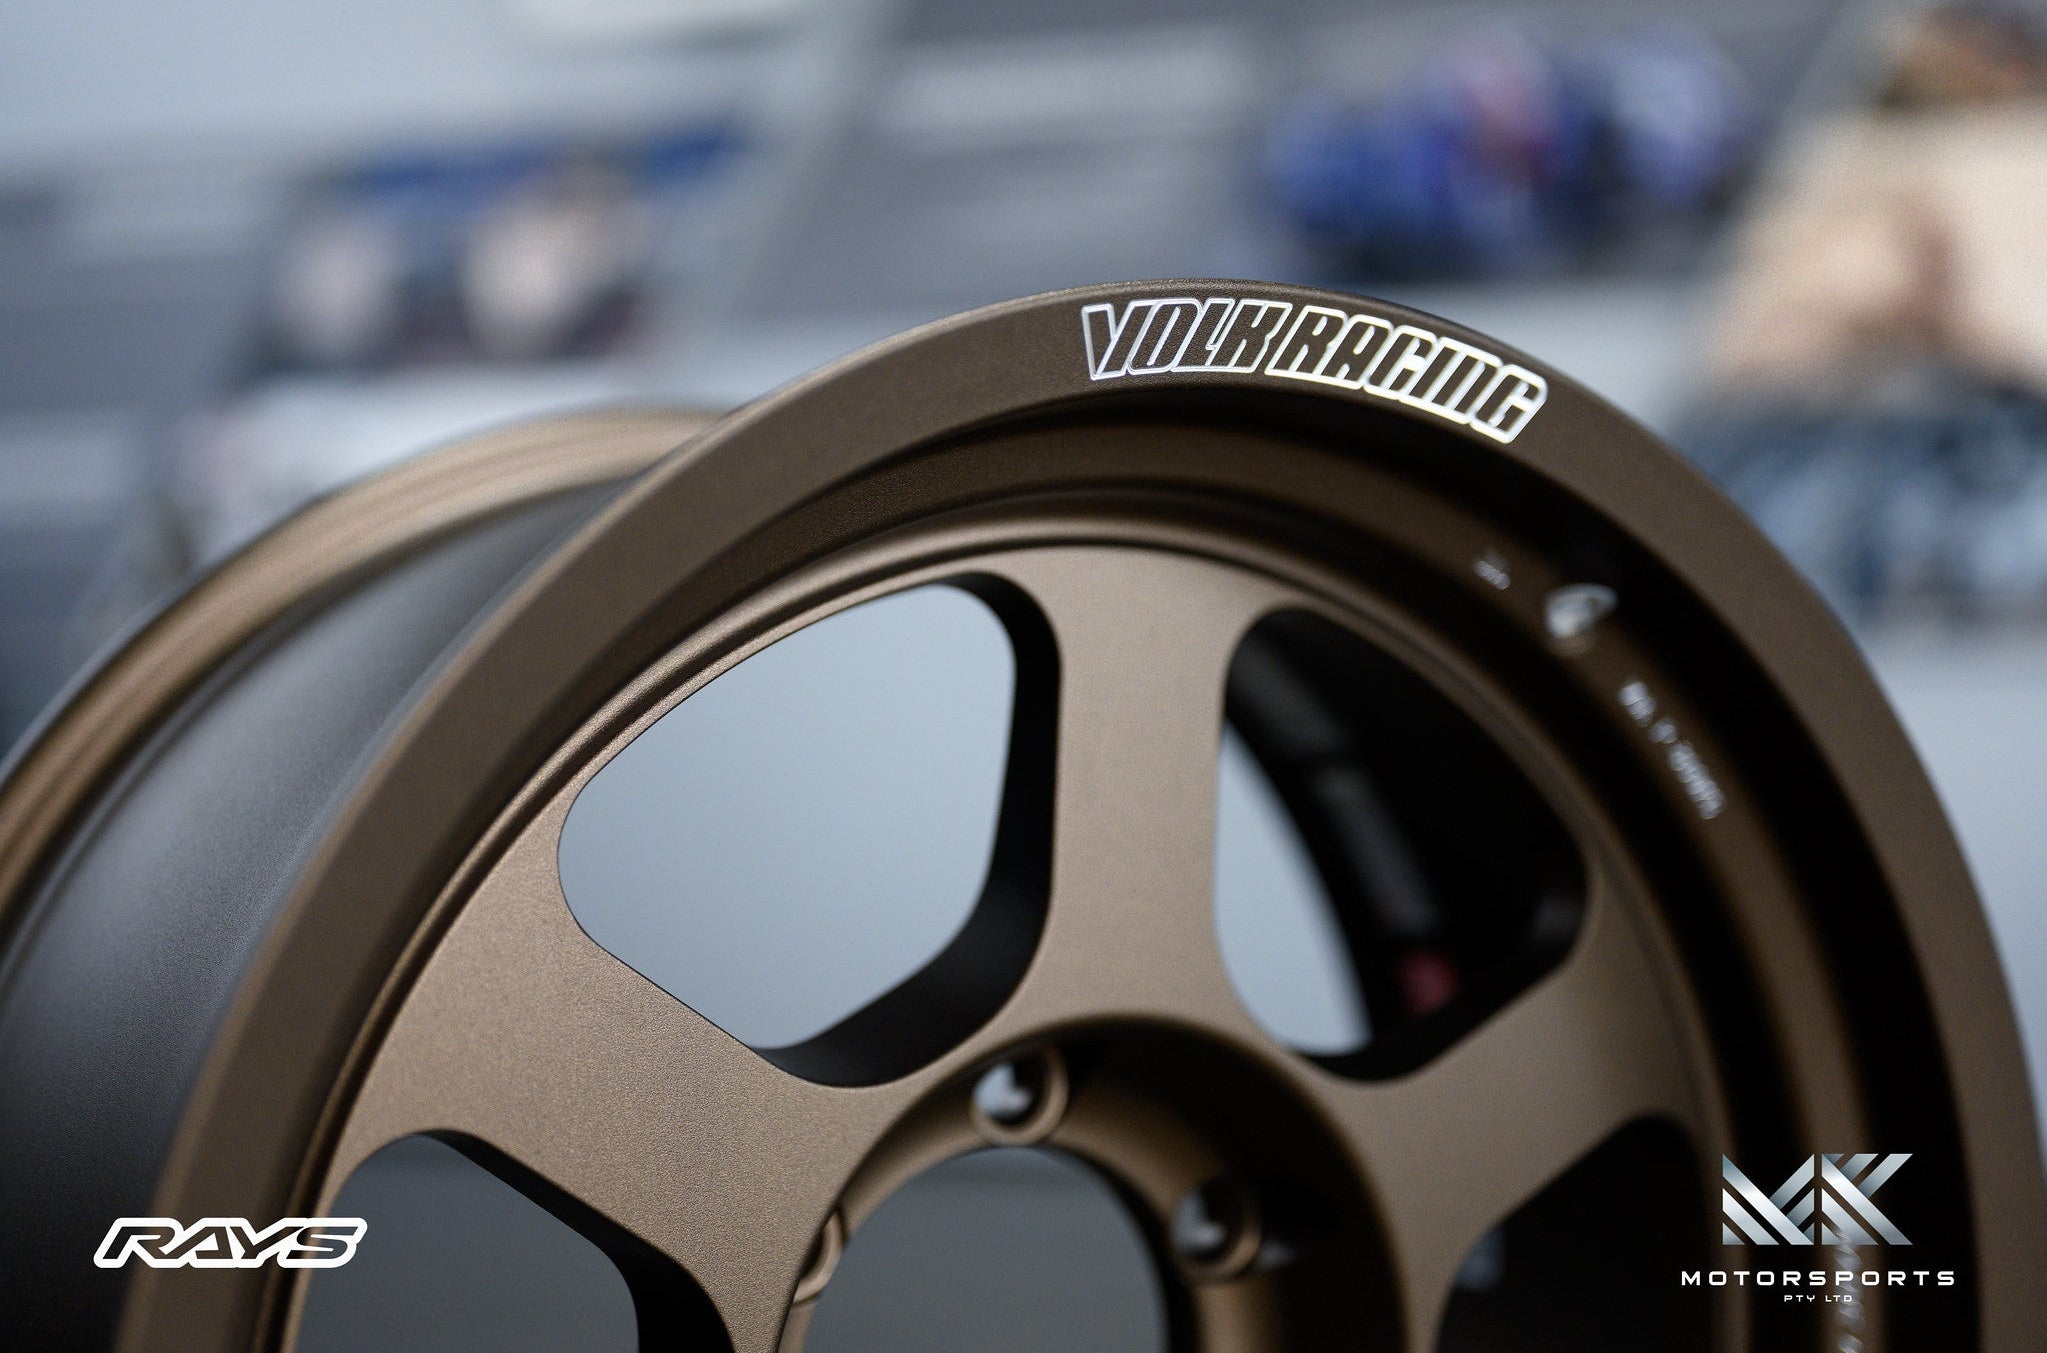 Volk Racing TE37 XT M-Spec - Premium Wheels from Volk Racing - From just $912.00! Shop now at MK MOTORSPORTS